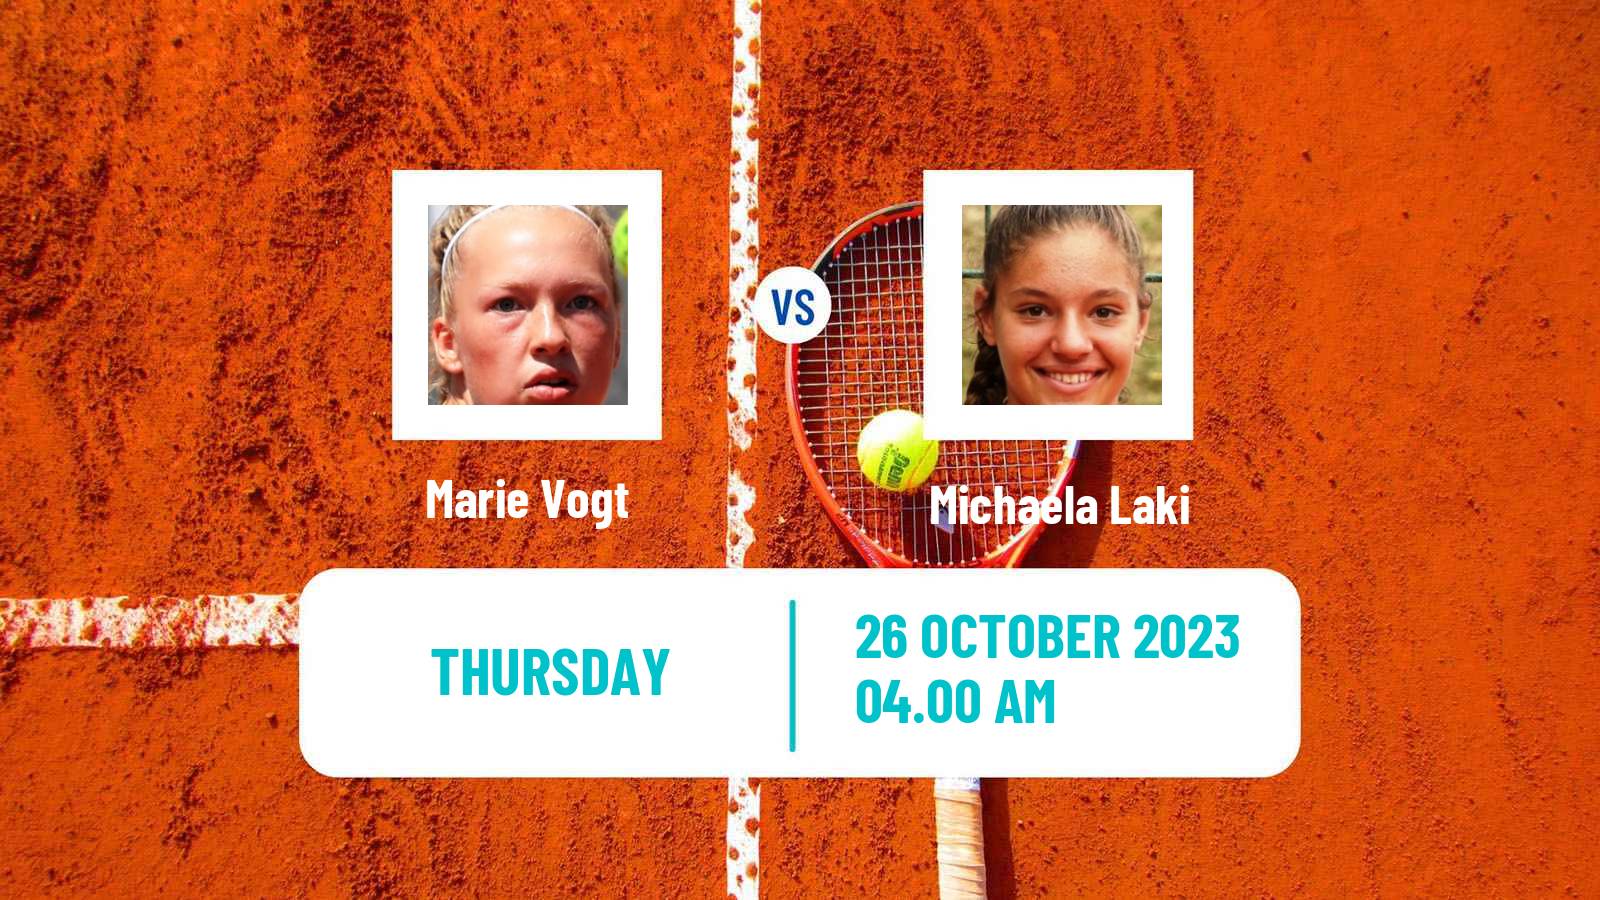 Tennis ITF W25 Heraklion Women Marie Vogt - Michaela Laki